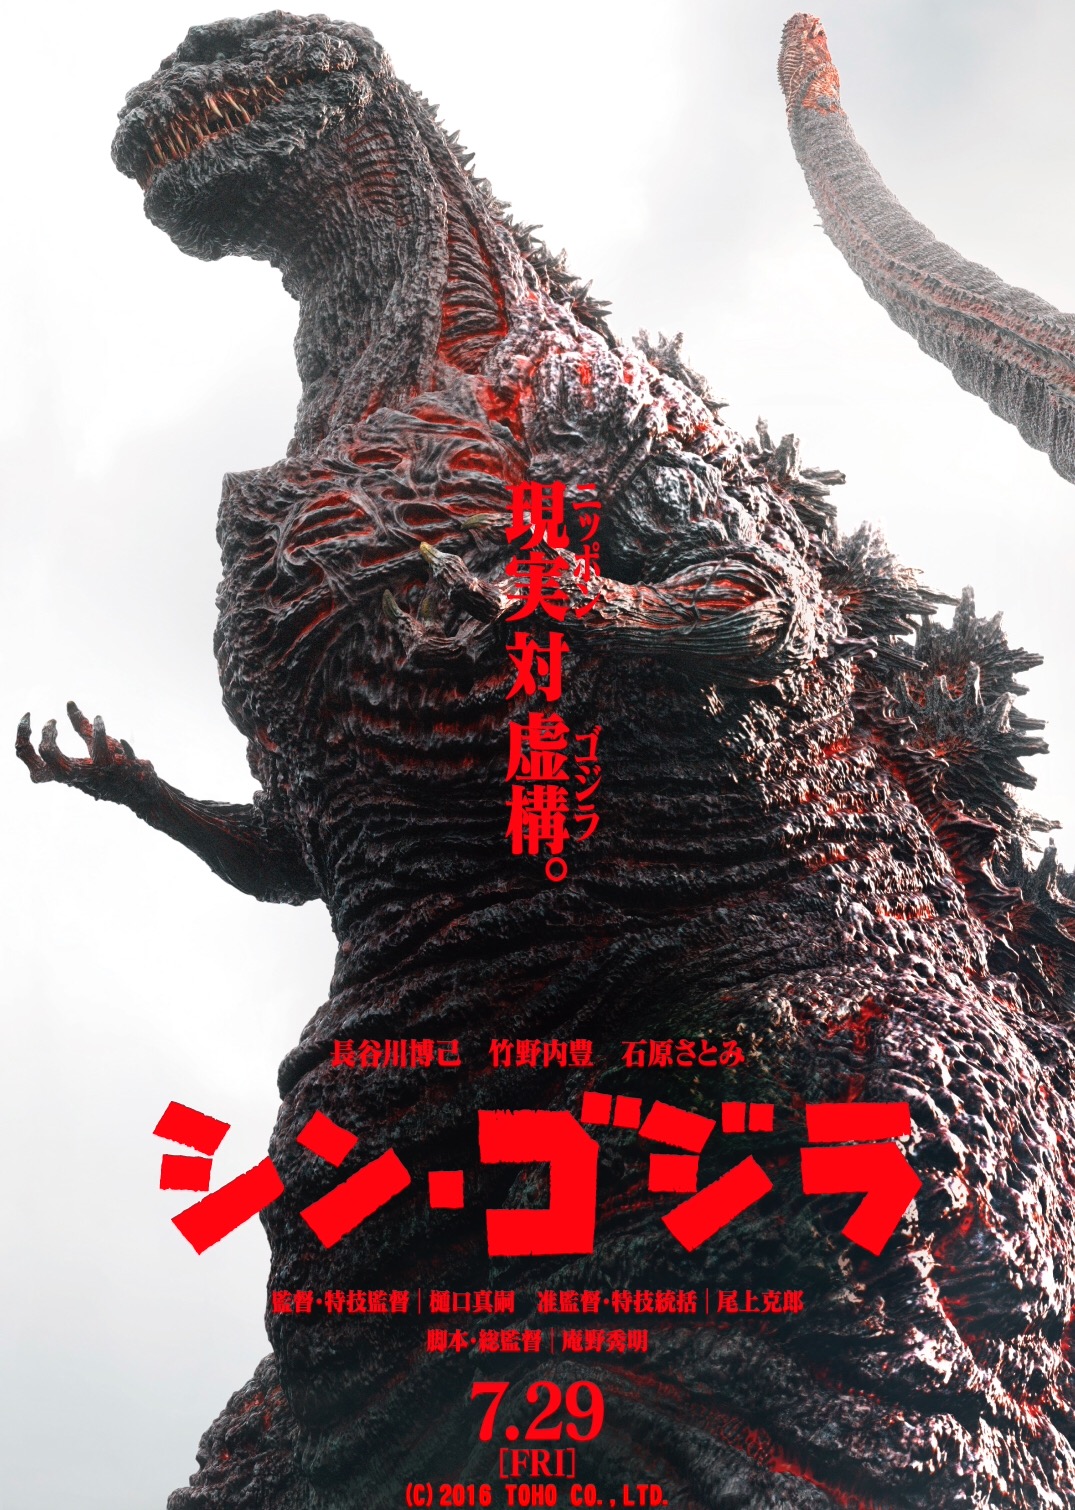 Nonton film Shin Godzilla layarkaca21 indoxx1 ganool online streaming terbaru